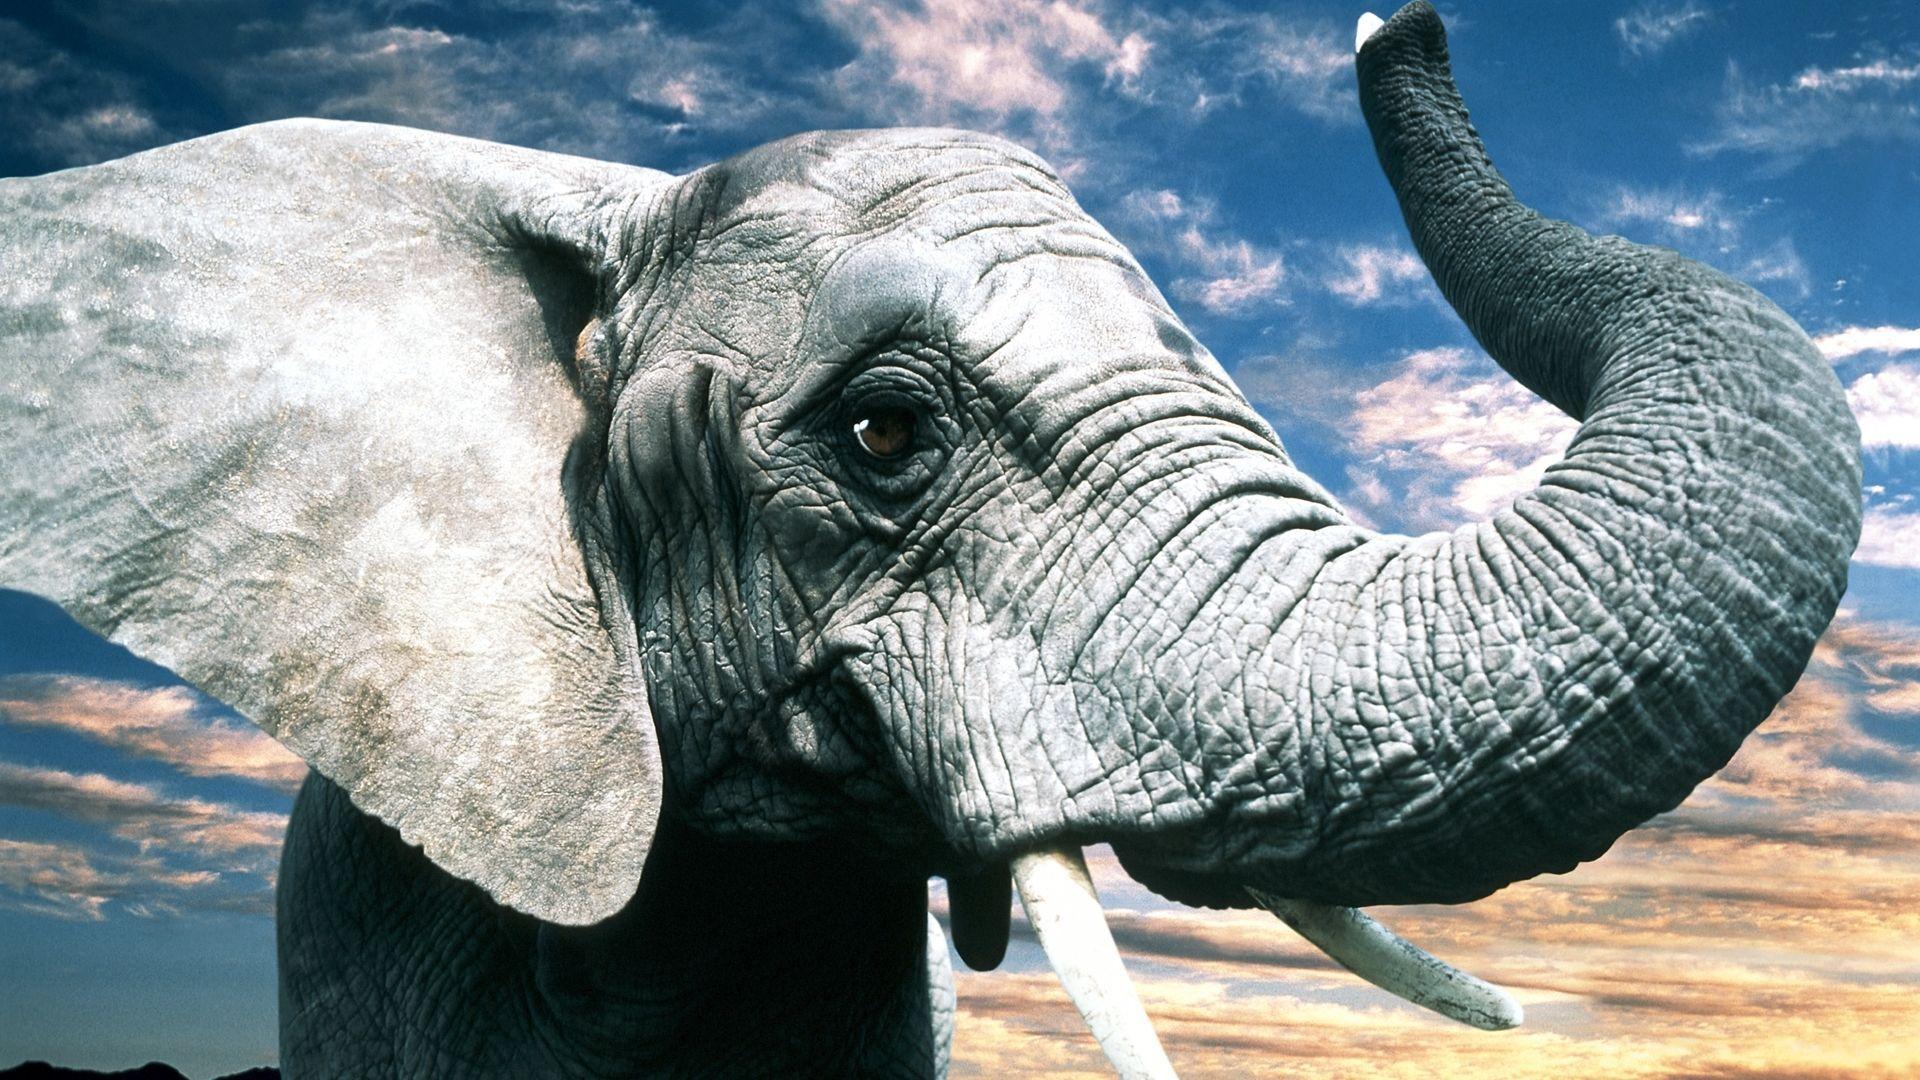 Elephant Wallpapers Free HD Download 500 HQ  Unsplash